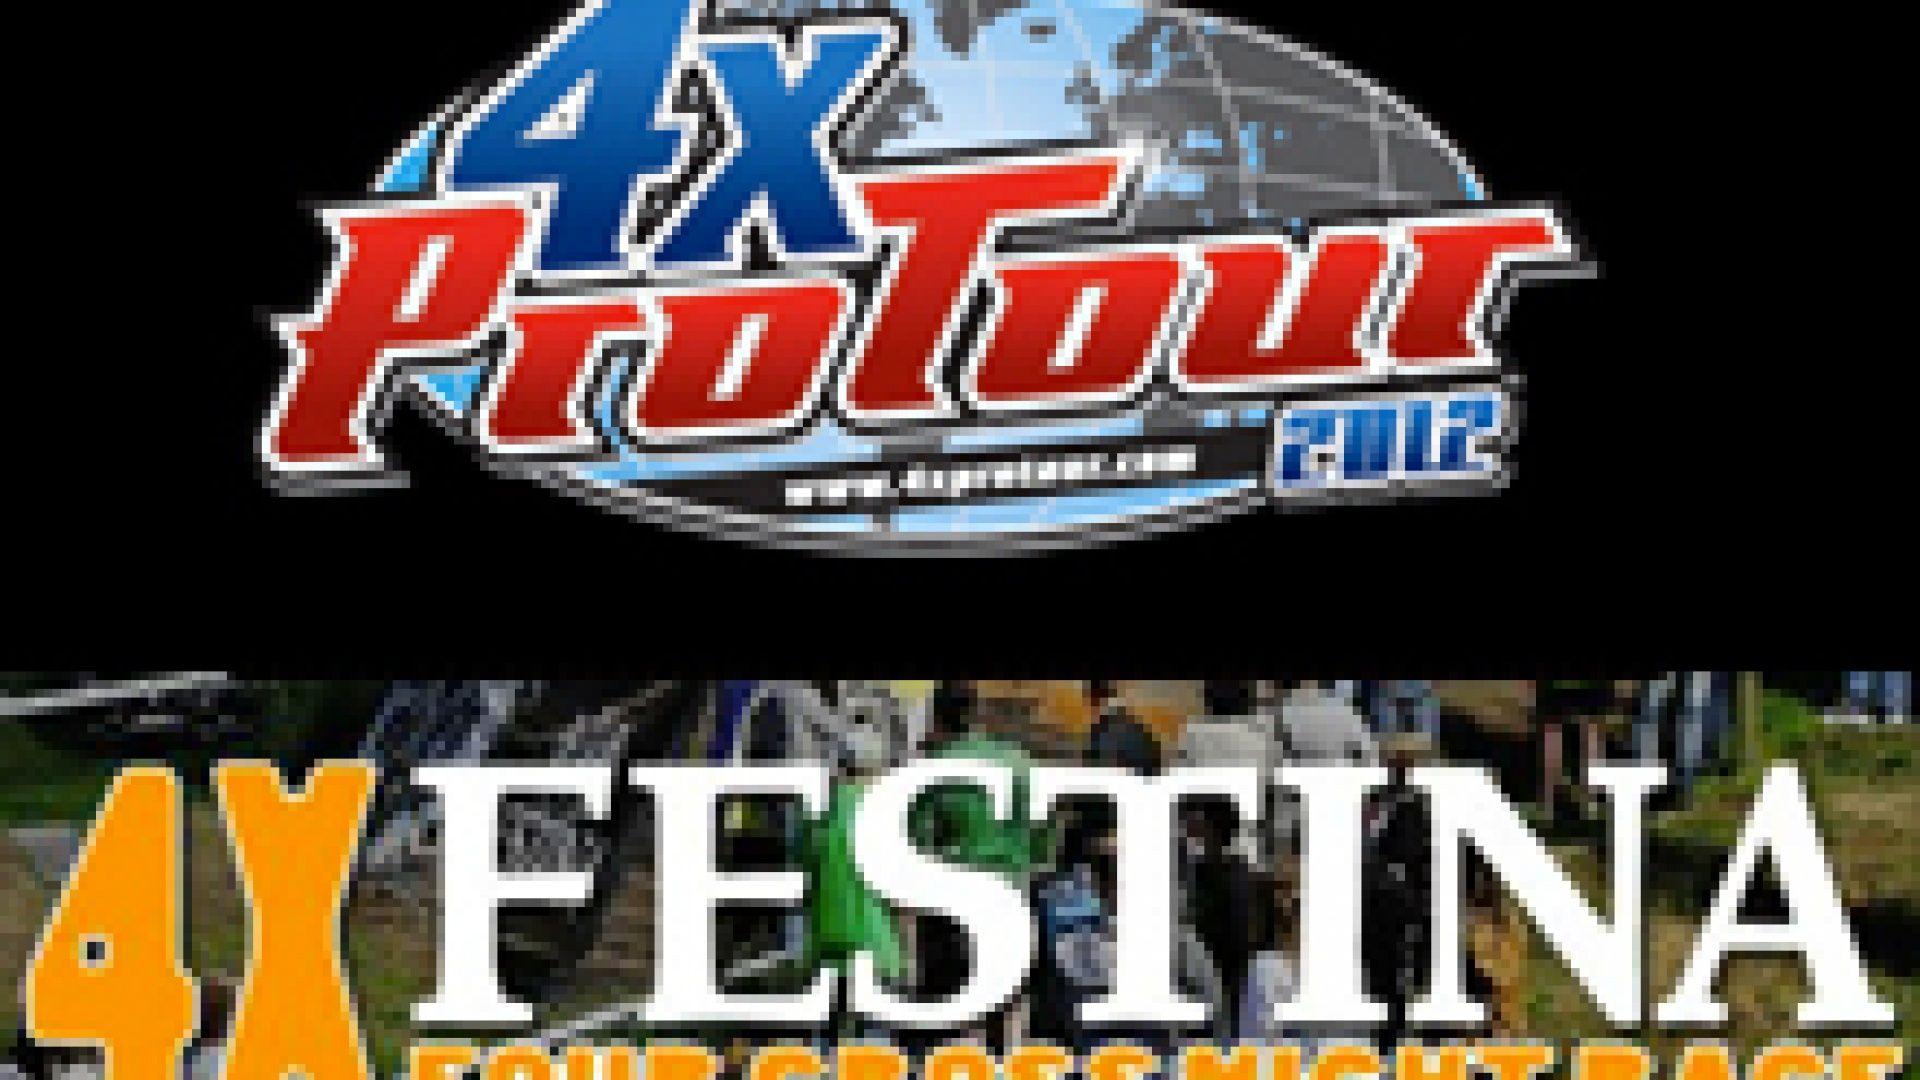 Festina Logo - Watch the Festina 4x ProTour race live here tonight! | Dirt Mountain ...